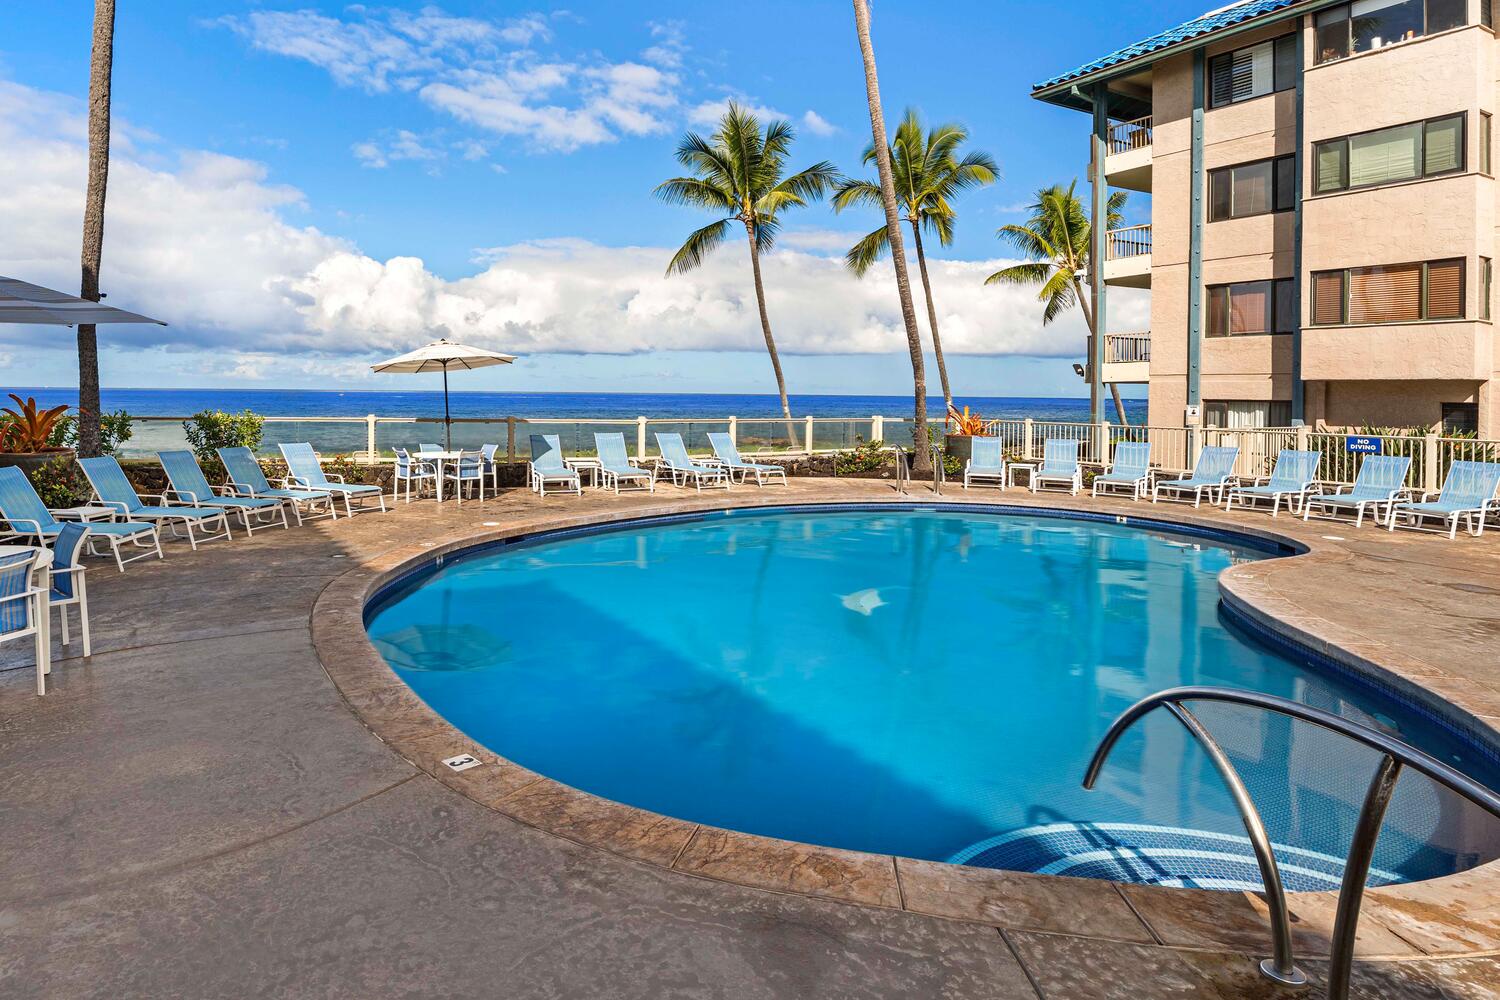 Kailua Kona Vacation Rentals, Kona Reef F23 - Lounge poolside with panoramic ocean views.